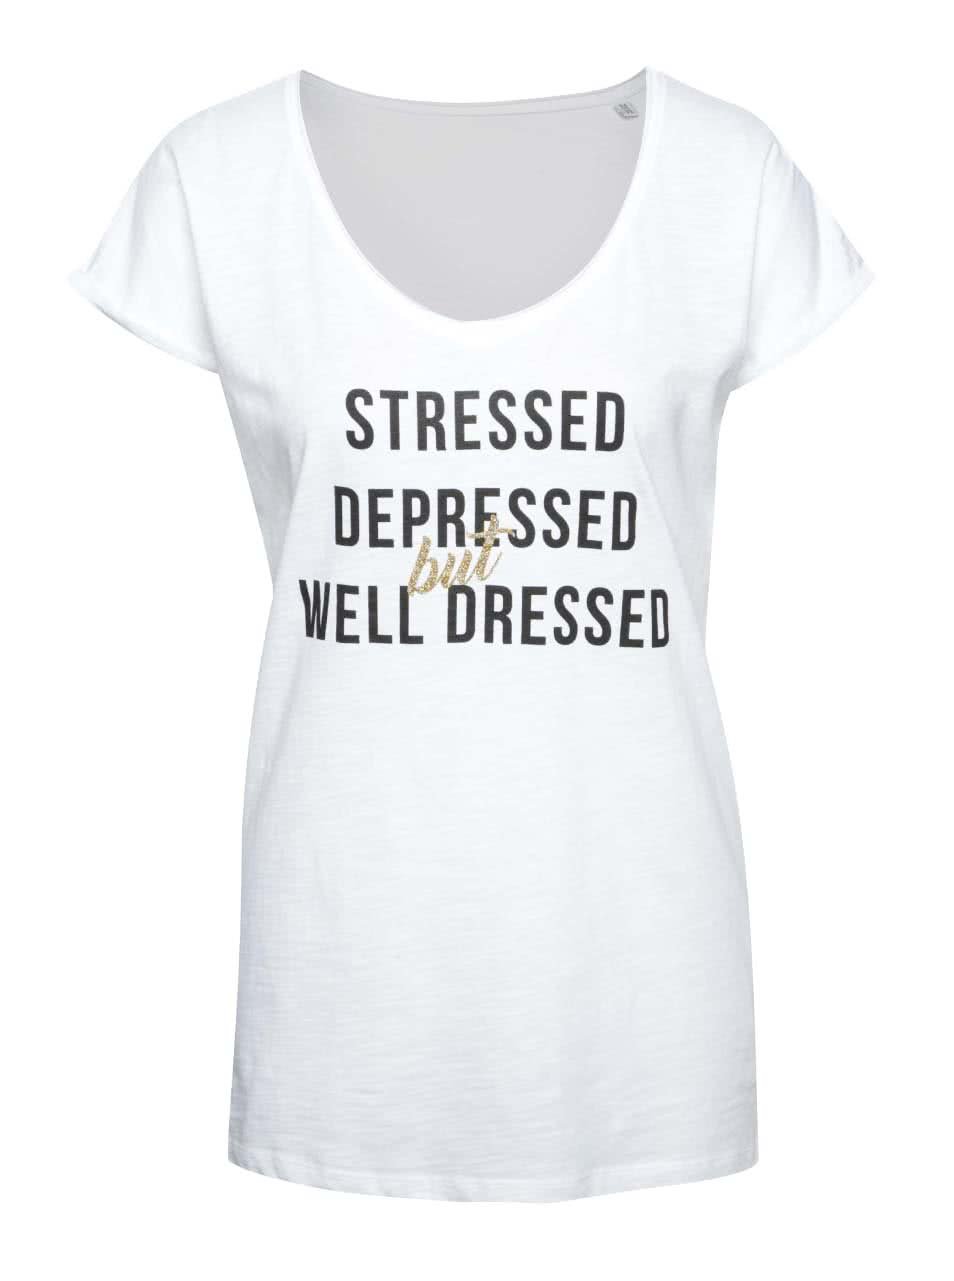 Bílé dámské tričko s potiskem ZOOT Originál Stressed, depressed but well dressed